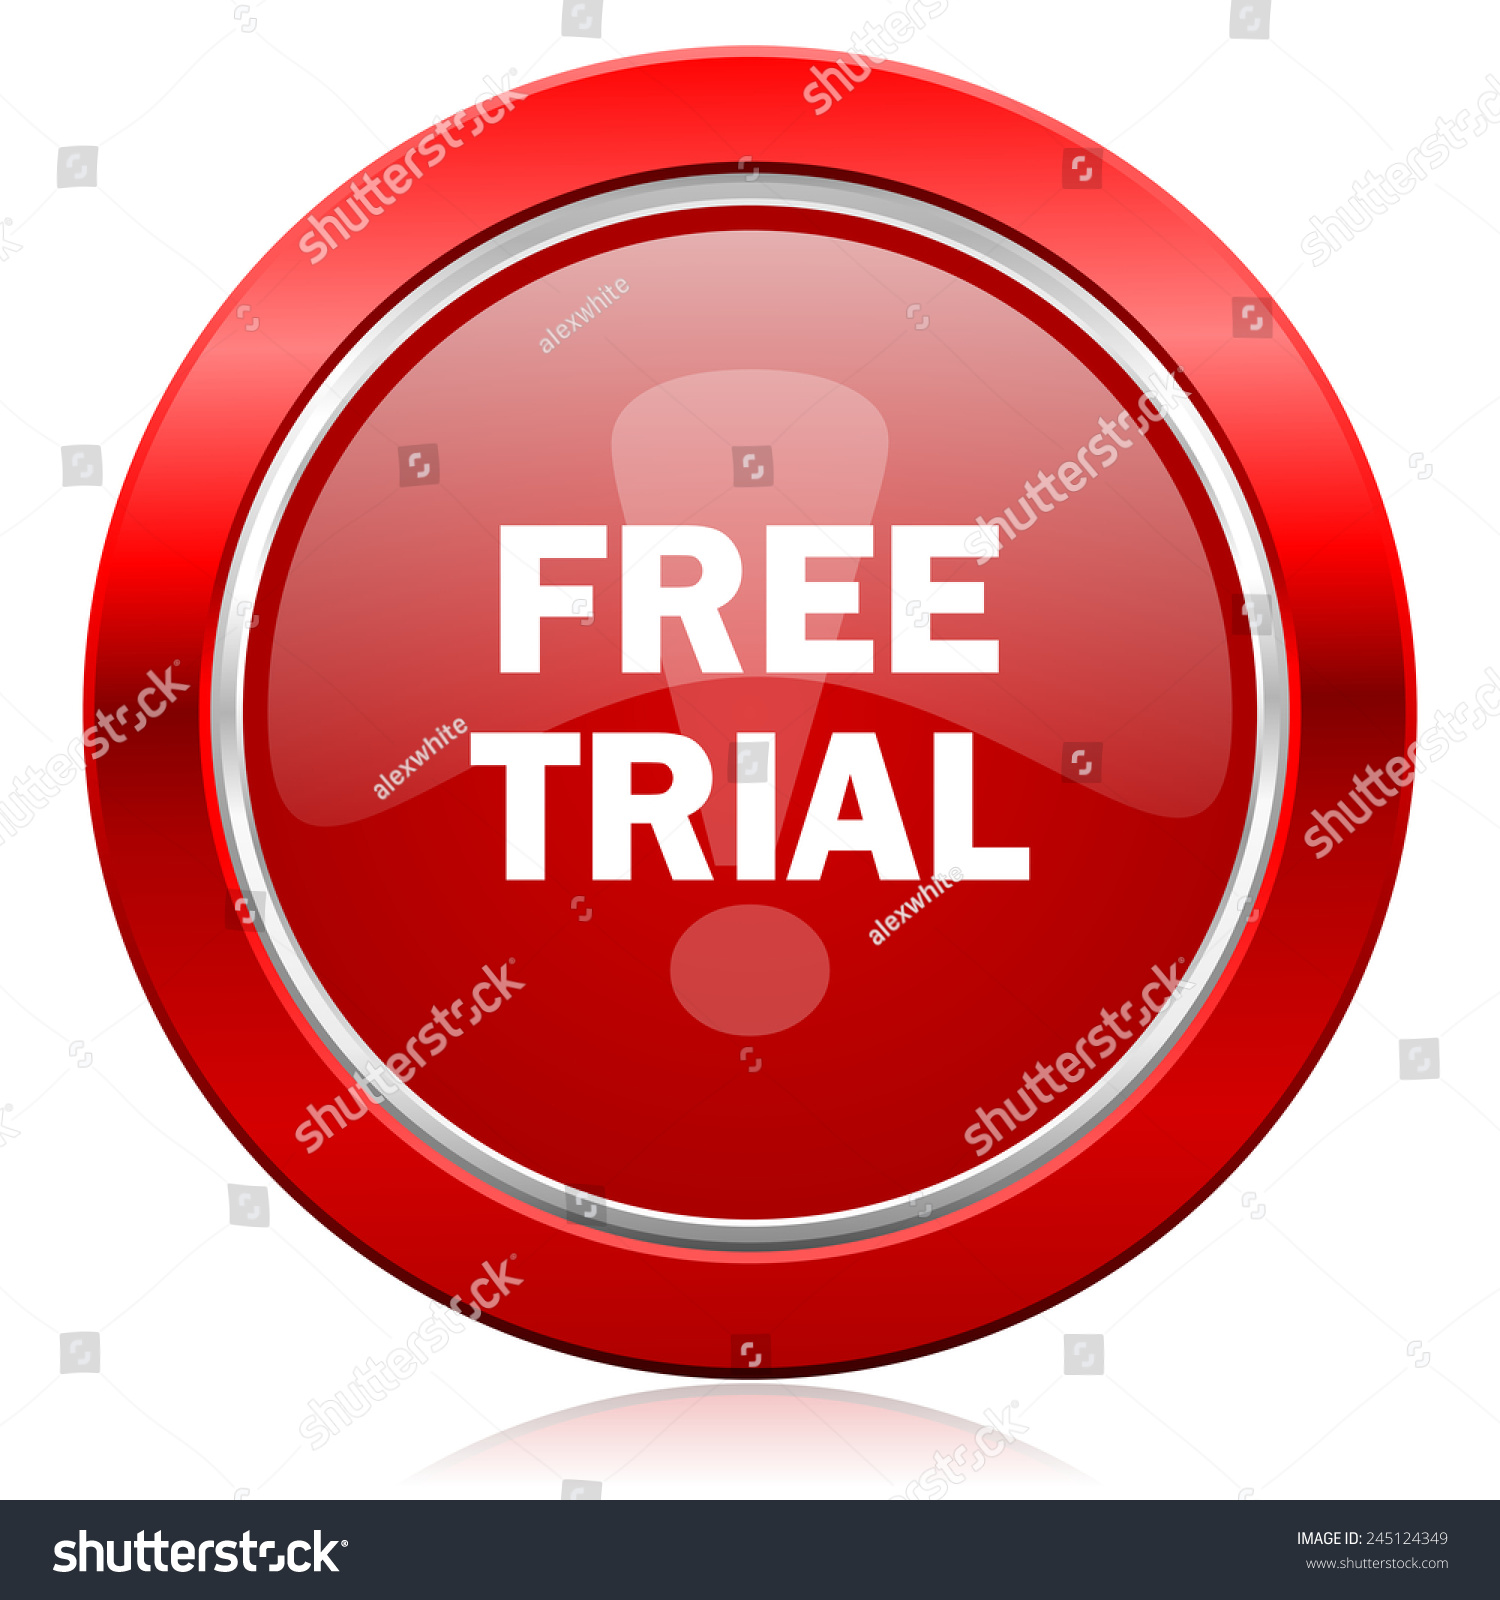 Free Download Kiosk Software Trial version